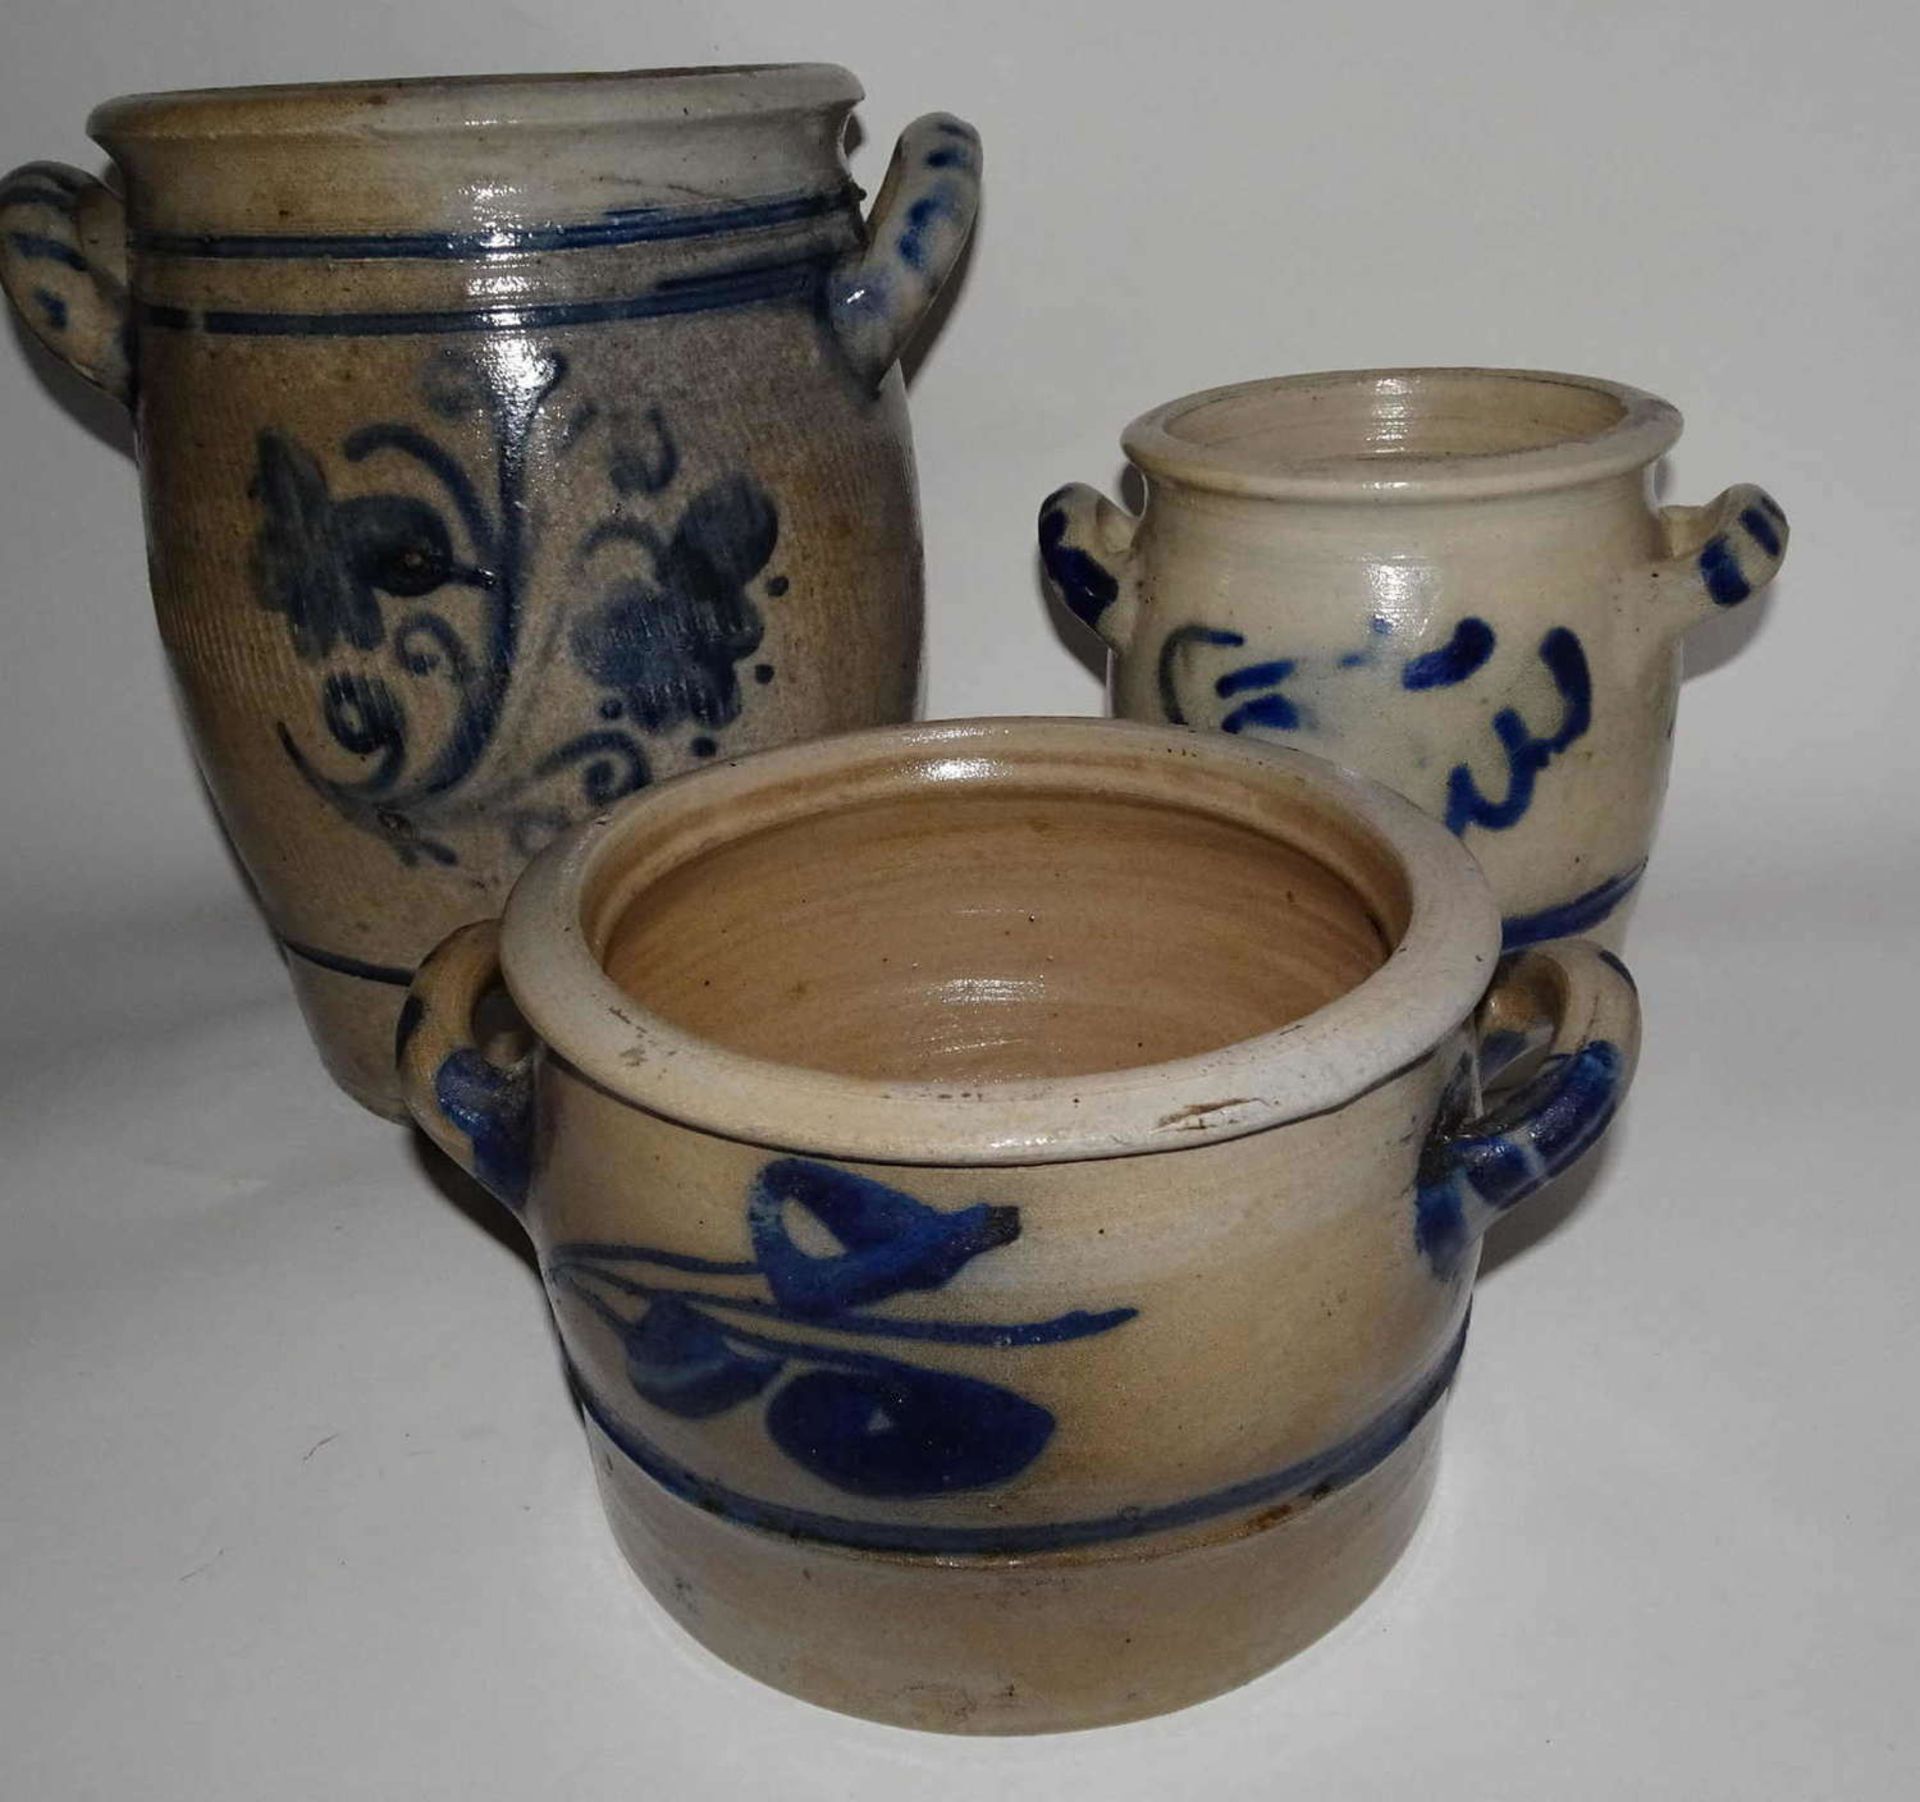 Lot of blue ceramic, altogether 3 parts, around 1910 - 1930 - Image 2 of 2